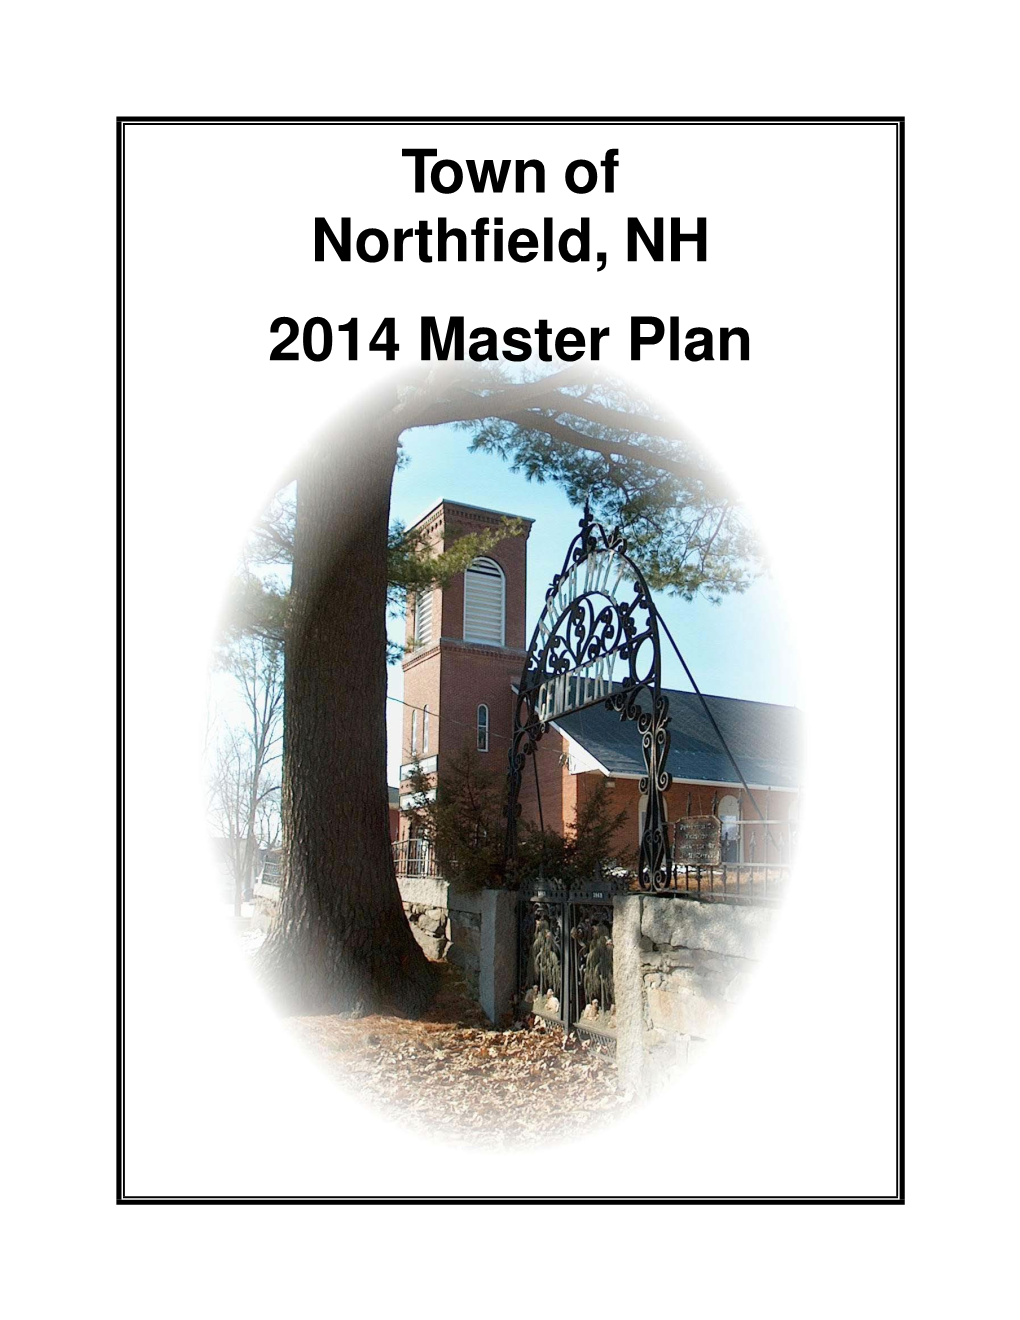 Town of Northfield, NH 2014 Master Plan